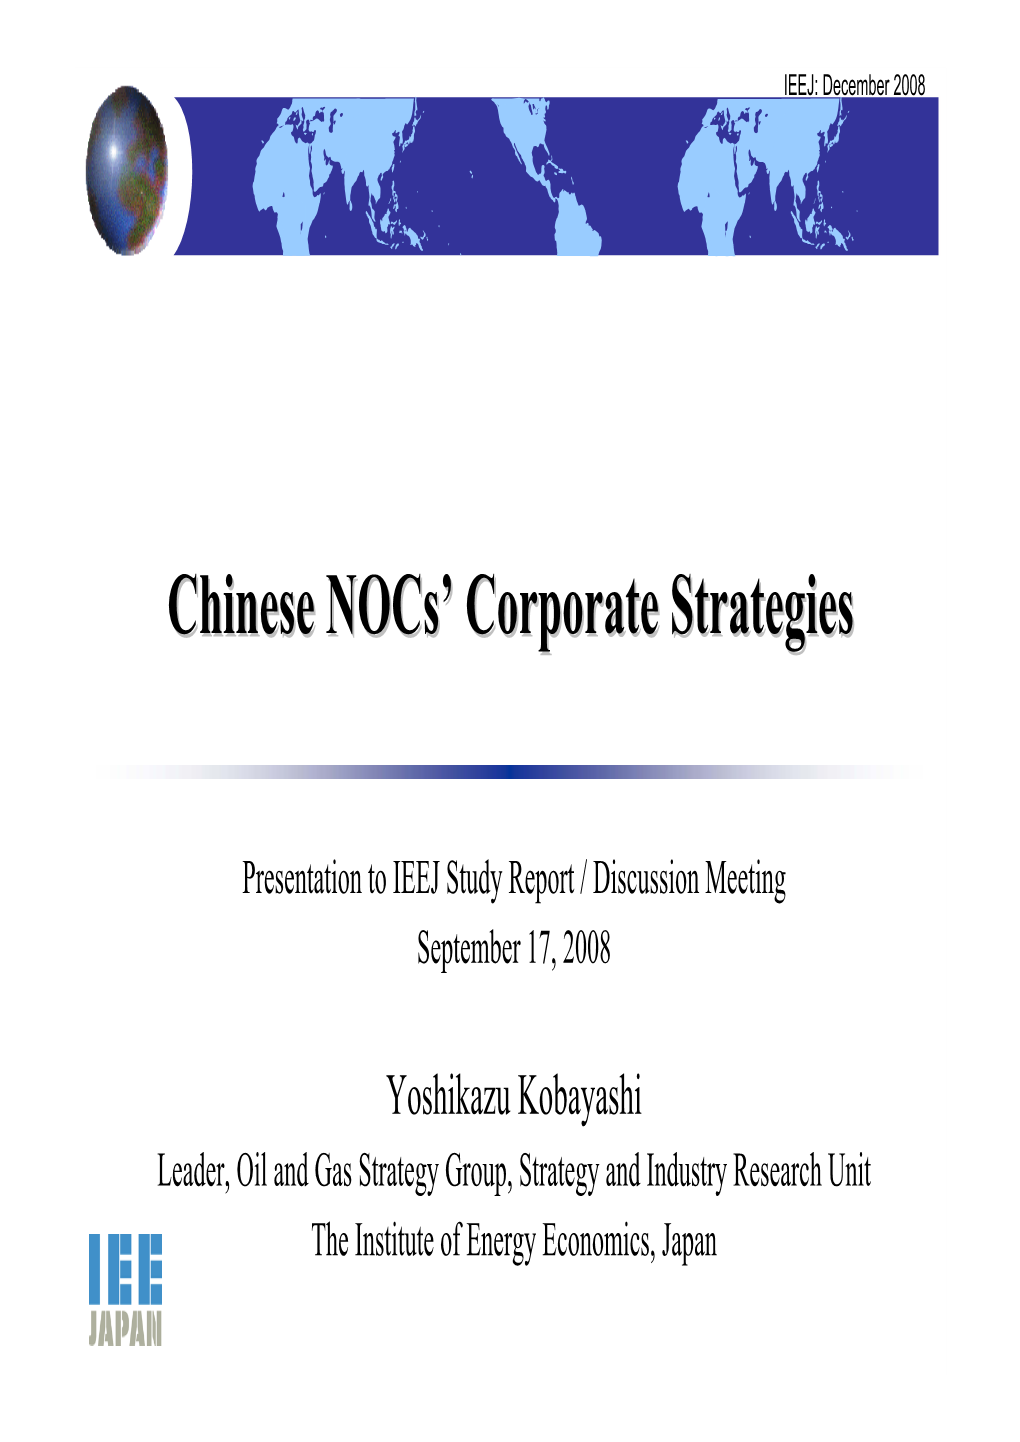 CNPC/Petrochina Sinopec CNOOC